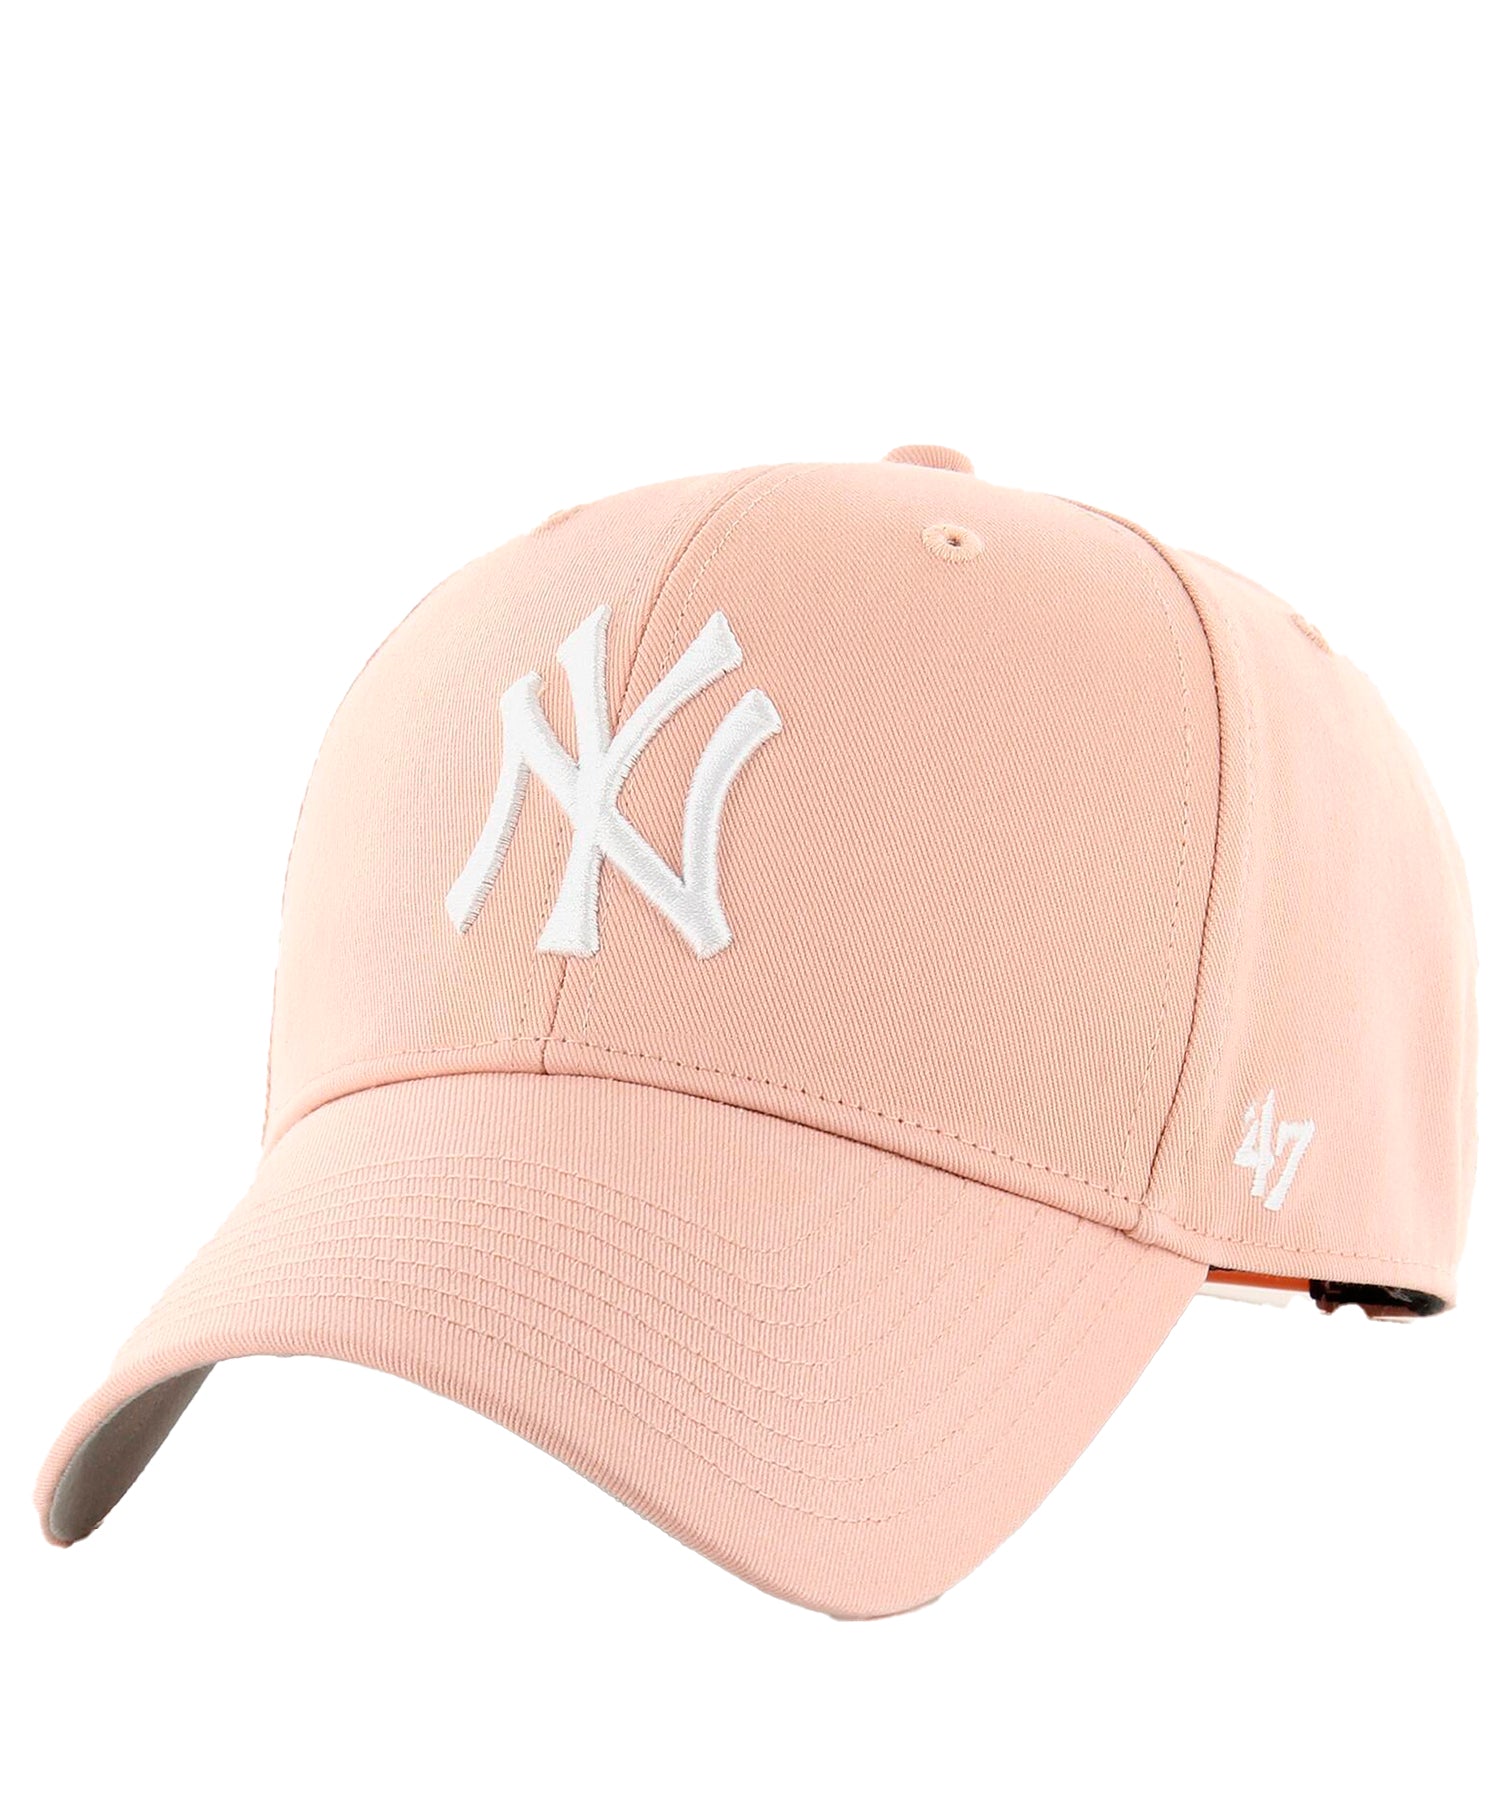 brand47-gorra-de-beisbol-new-york-yankees-color-rosa-visera-curva-ajustable-logo-ny.